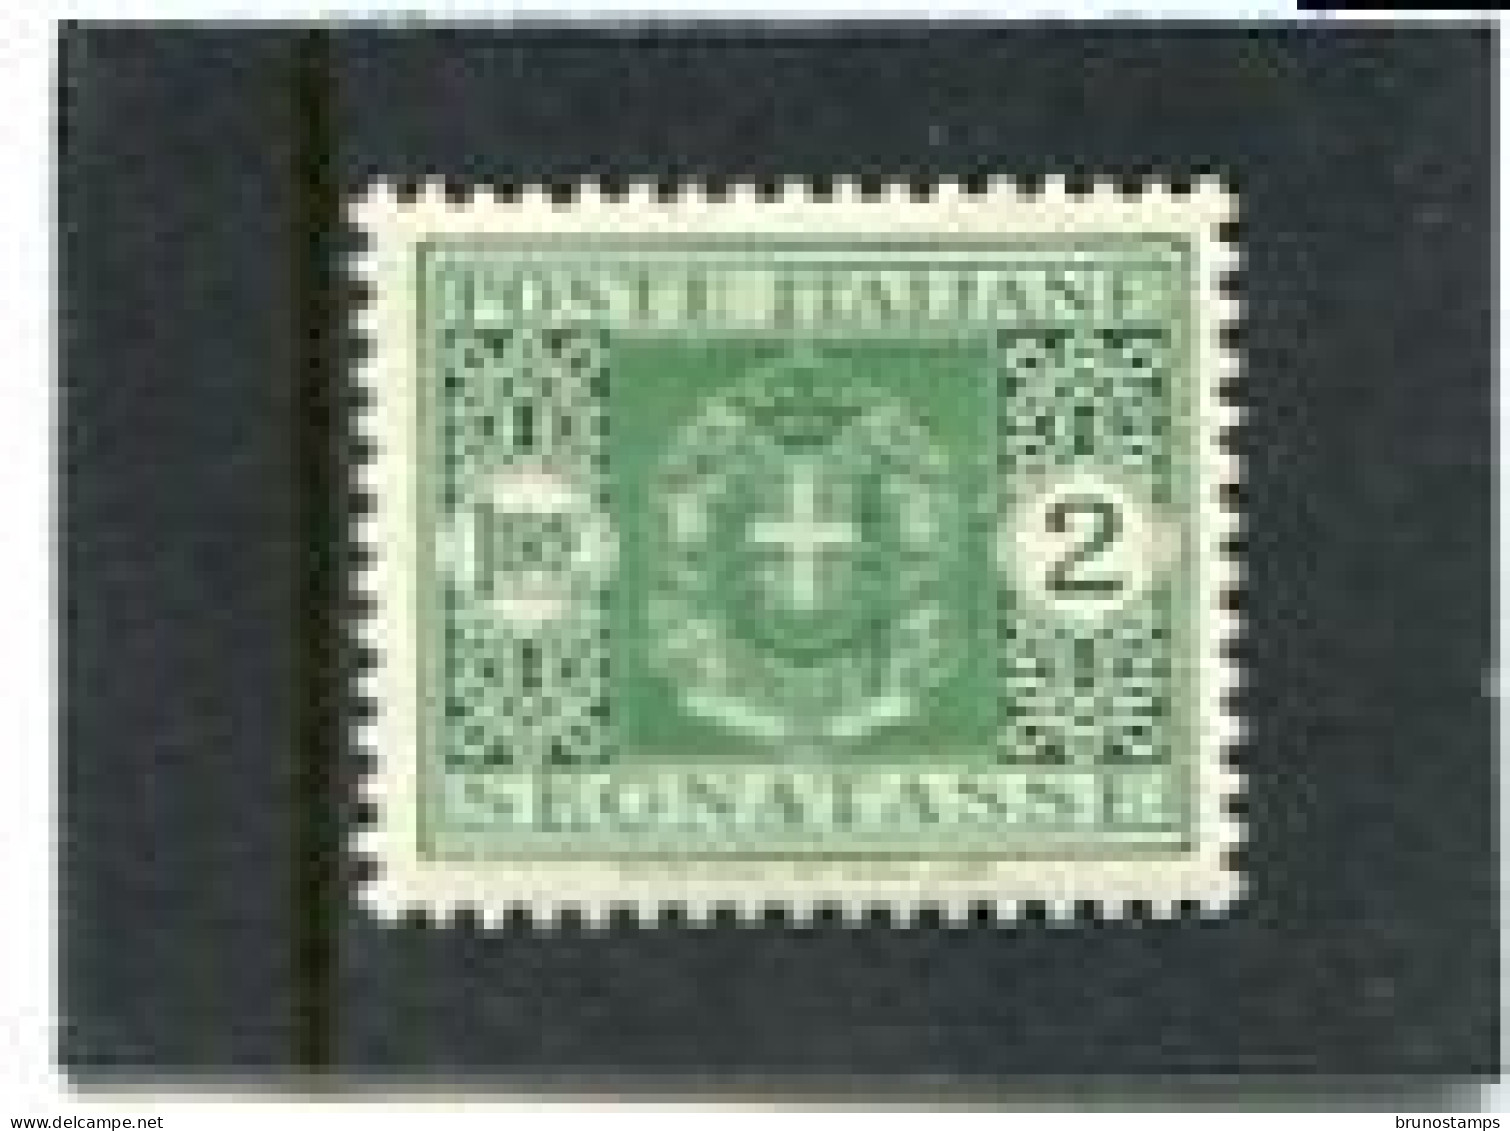 ITALY/ITALIA - 1934  POSTAGE DUE  2 L  MINT NH - Portomarken